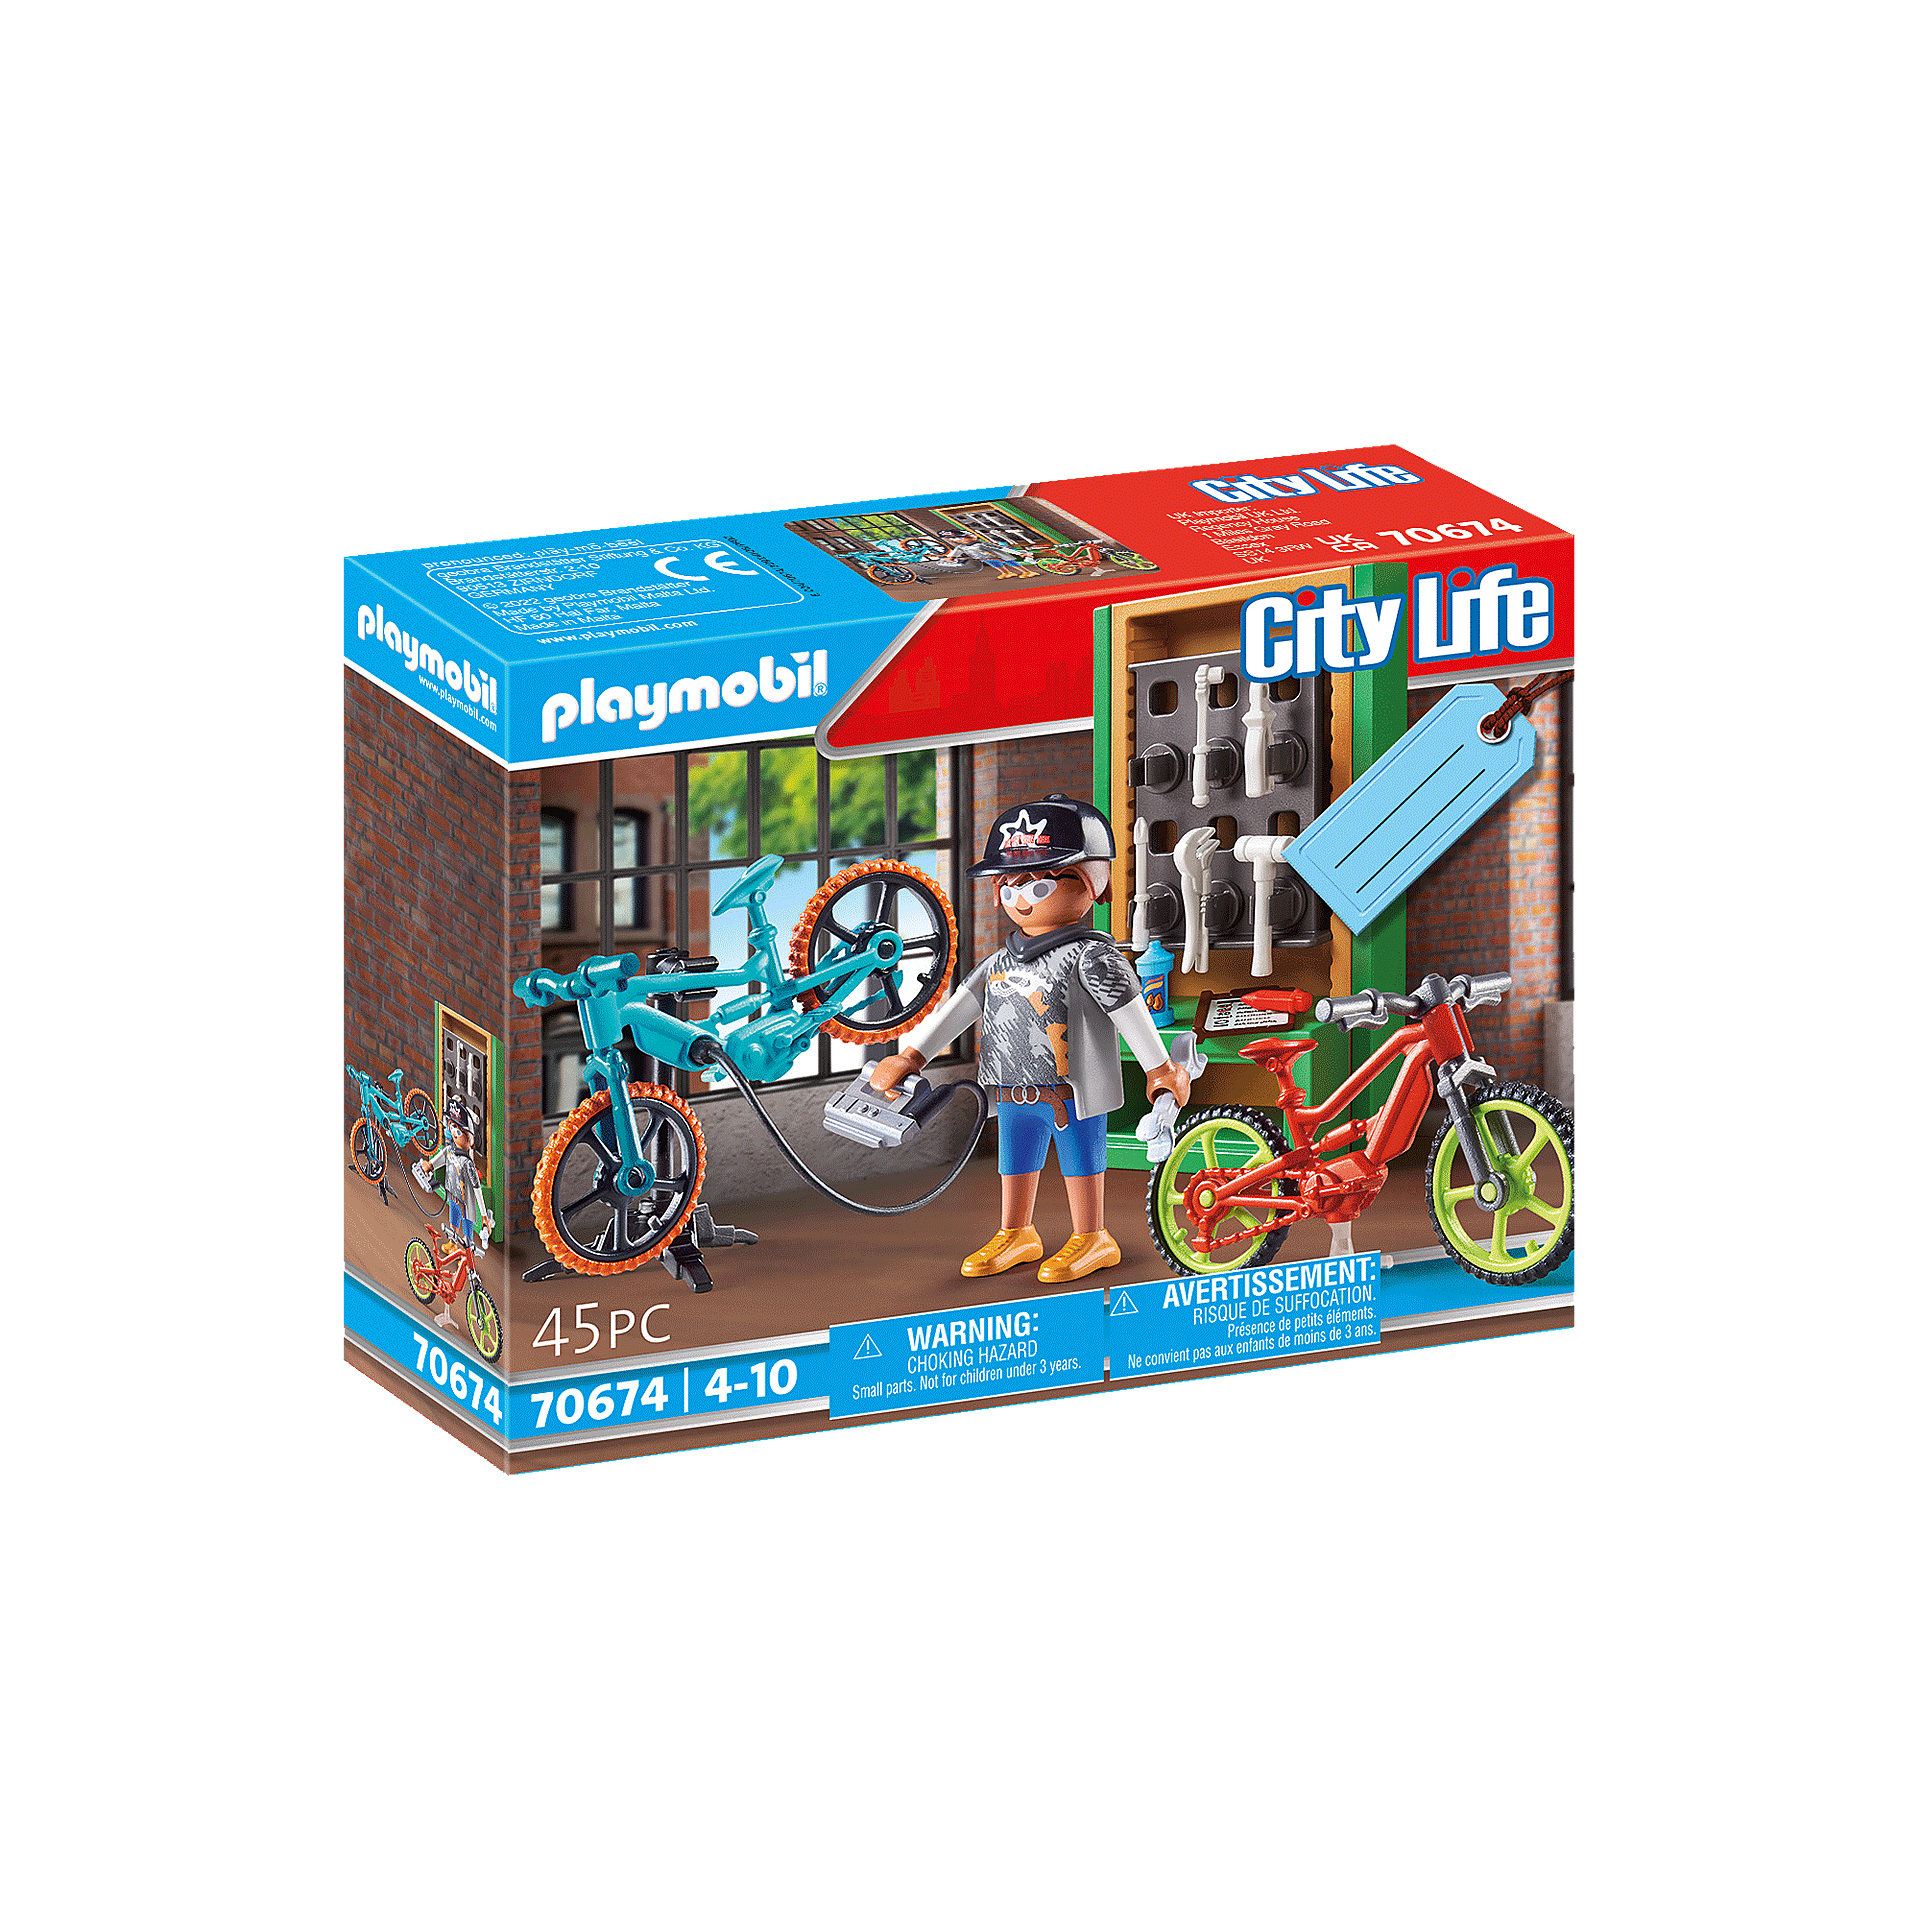 Playmobil-City Life - E-Bike Workshop Gift Set-70674-Legacy Toys